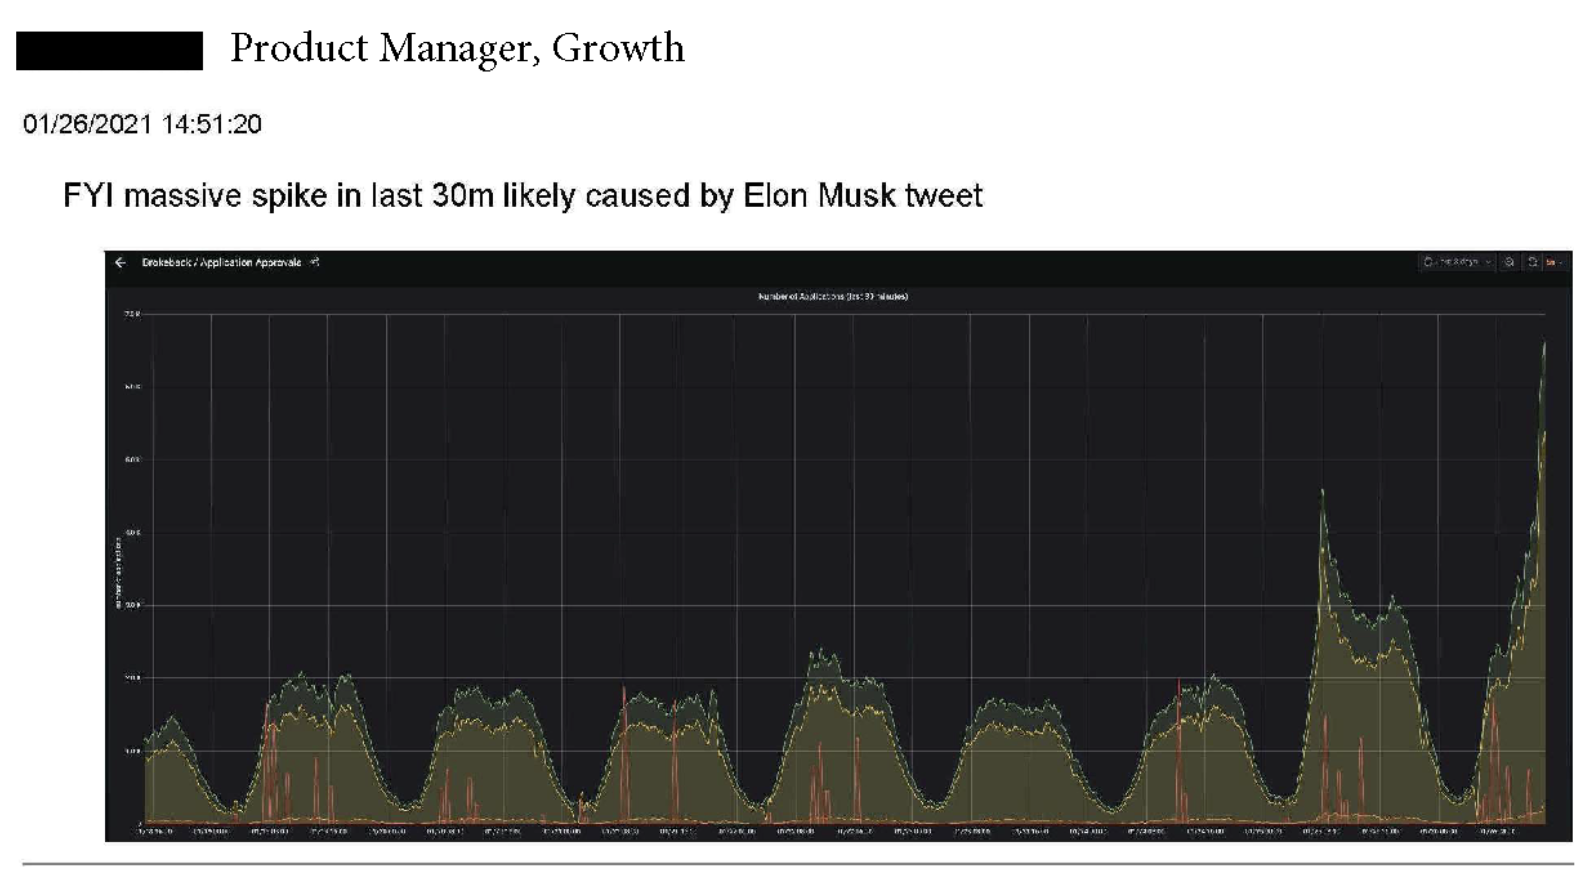 Elon Musk's tweet caused a massive spike in Robinhood activity.